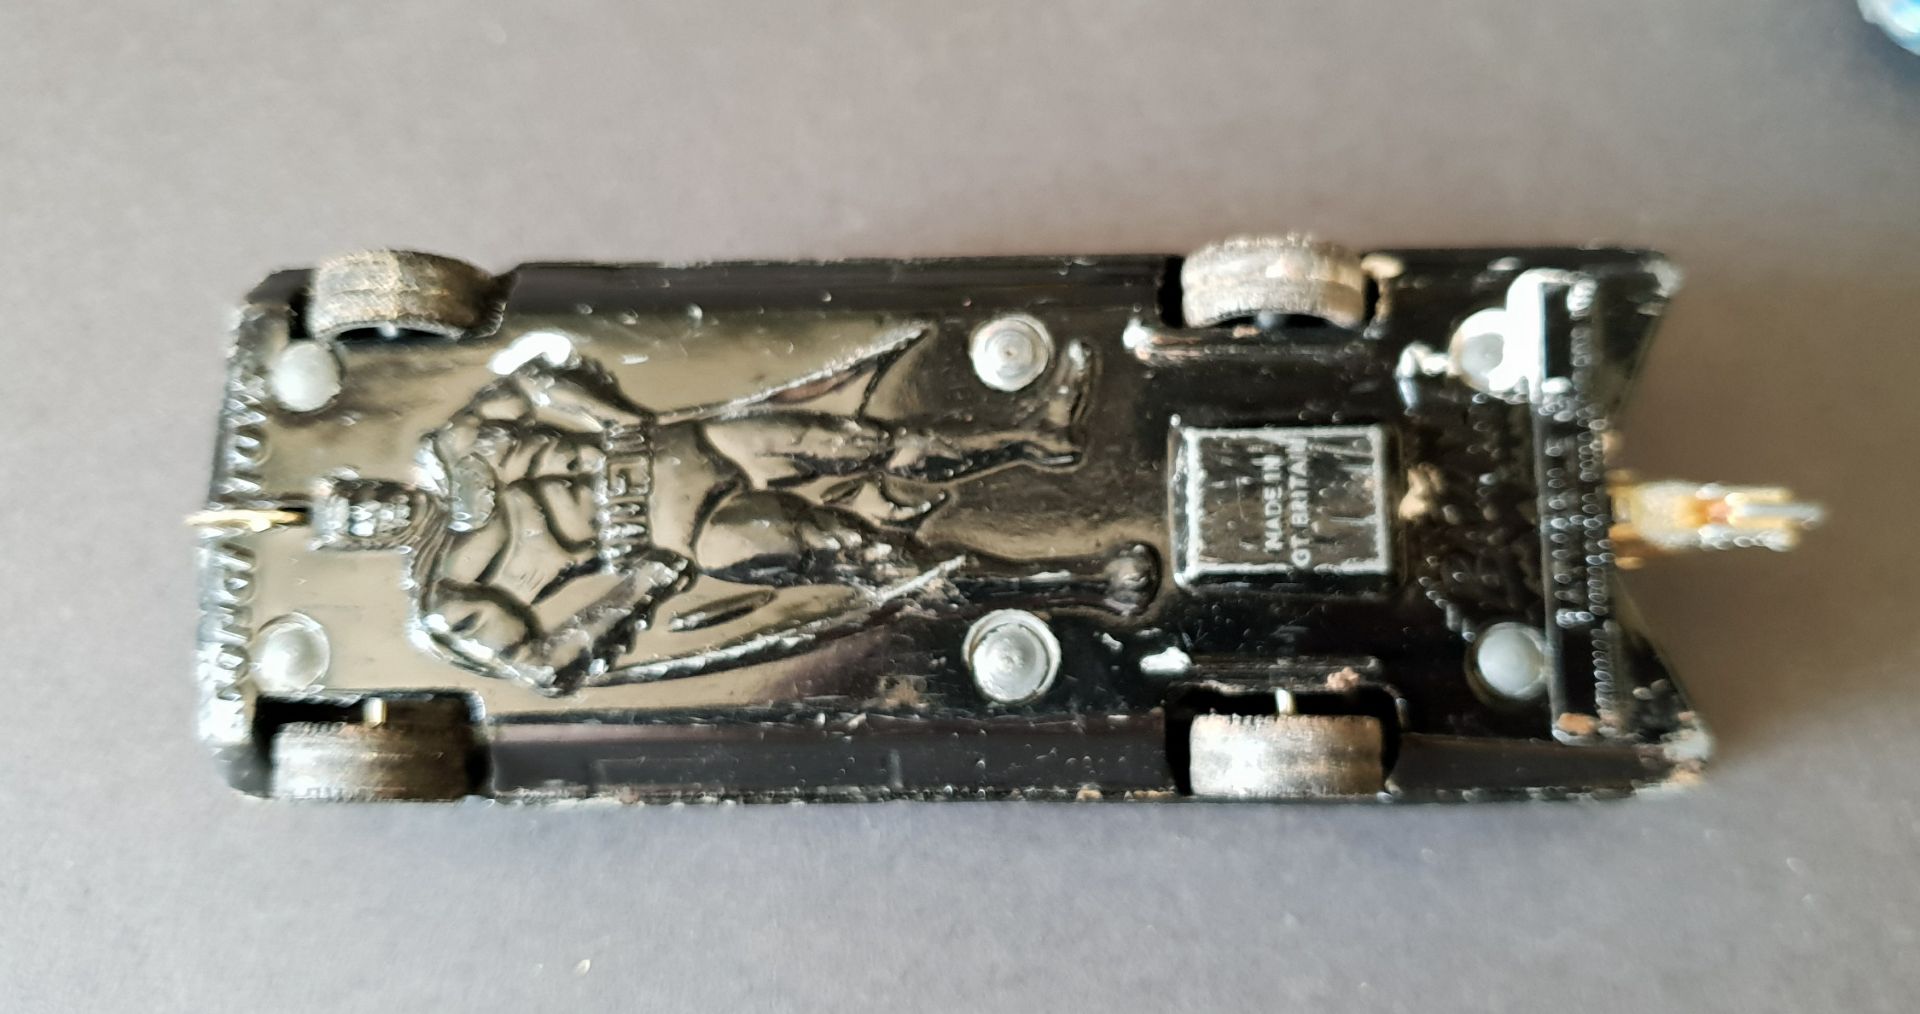 Vintage Collectable Die Cast Metal Toy Corgi Bat Mobile Comma Bus & Matchbox Transporter - Image 2 of 4